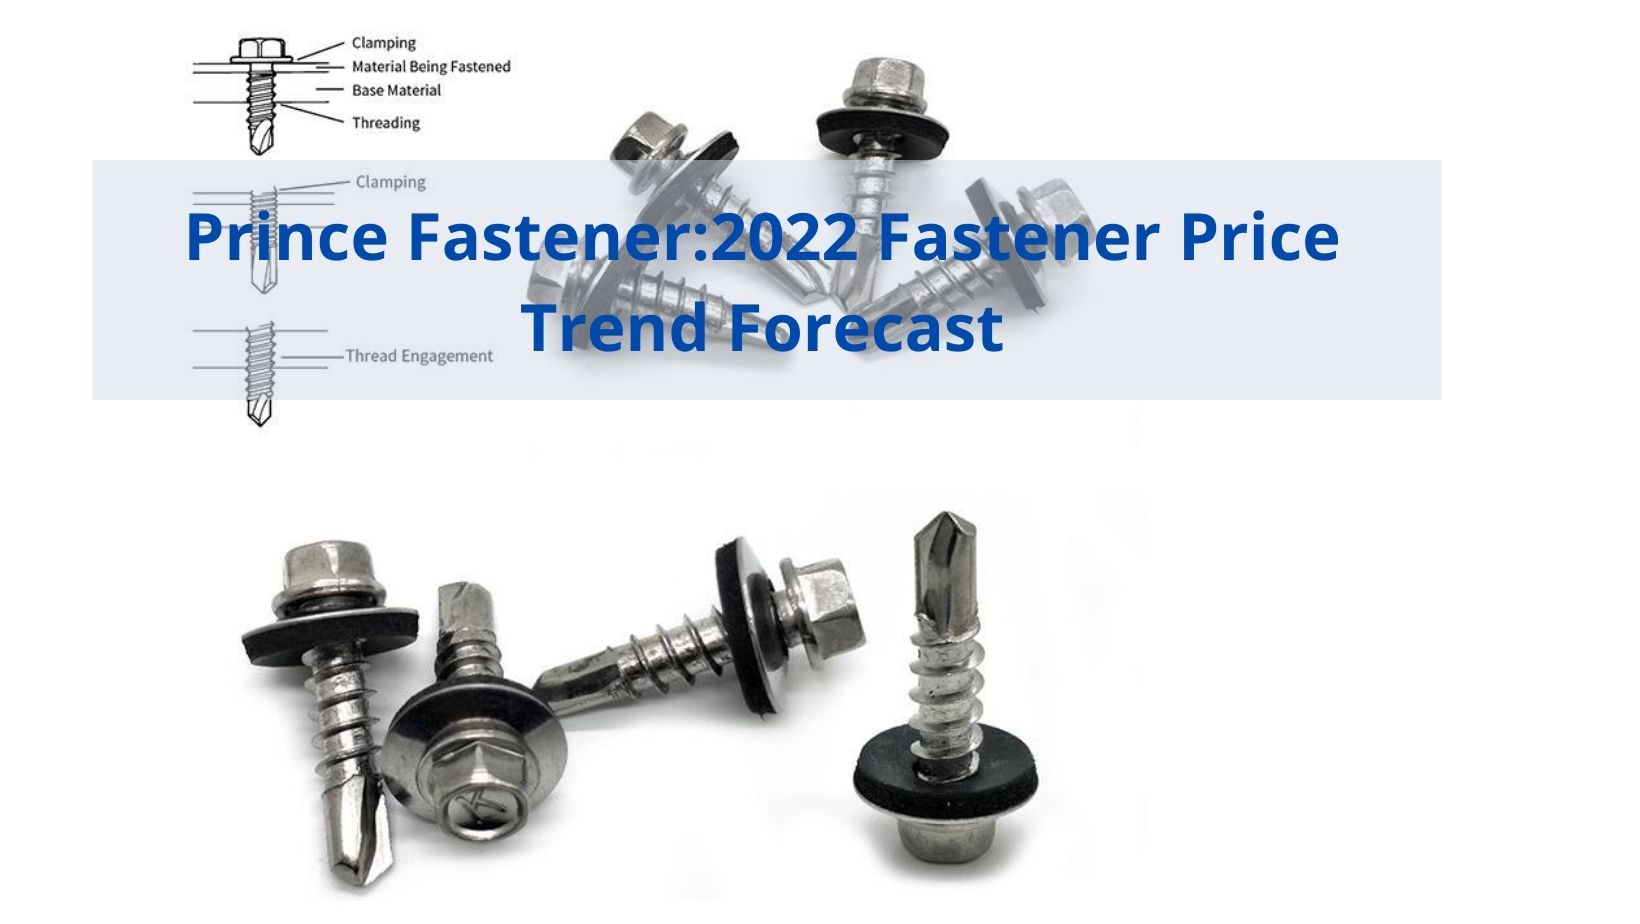 Prince Fastener Прогноз тренда цен на крепеж на 2022 год